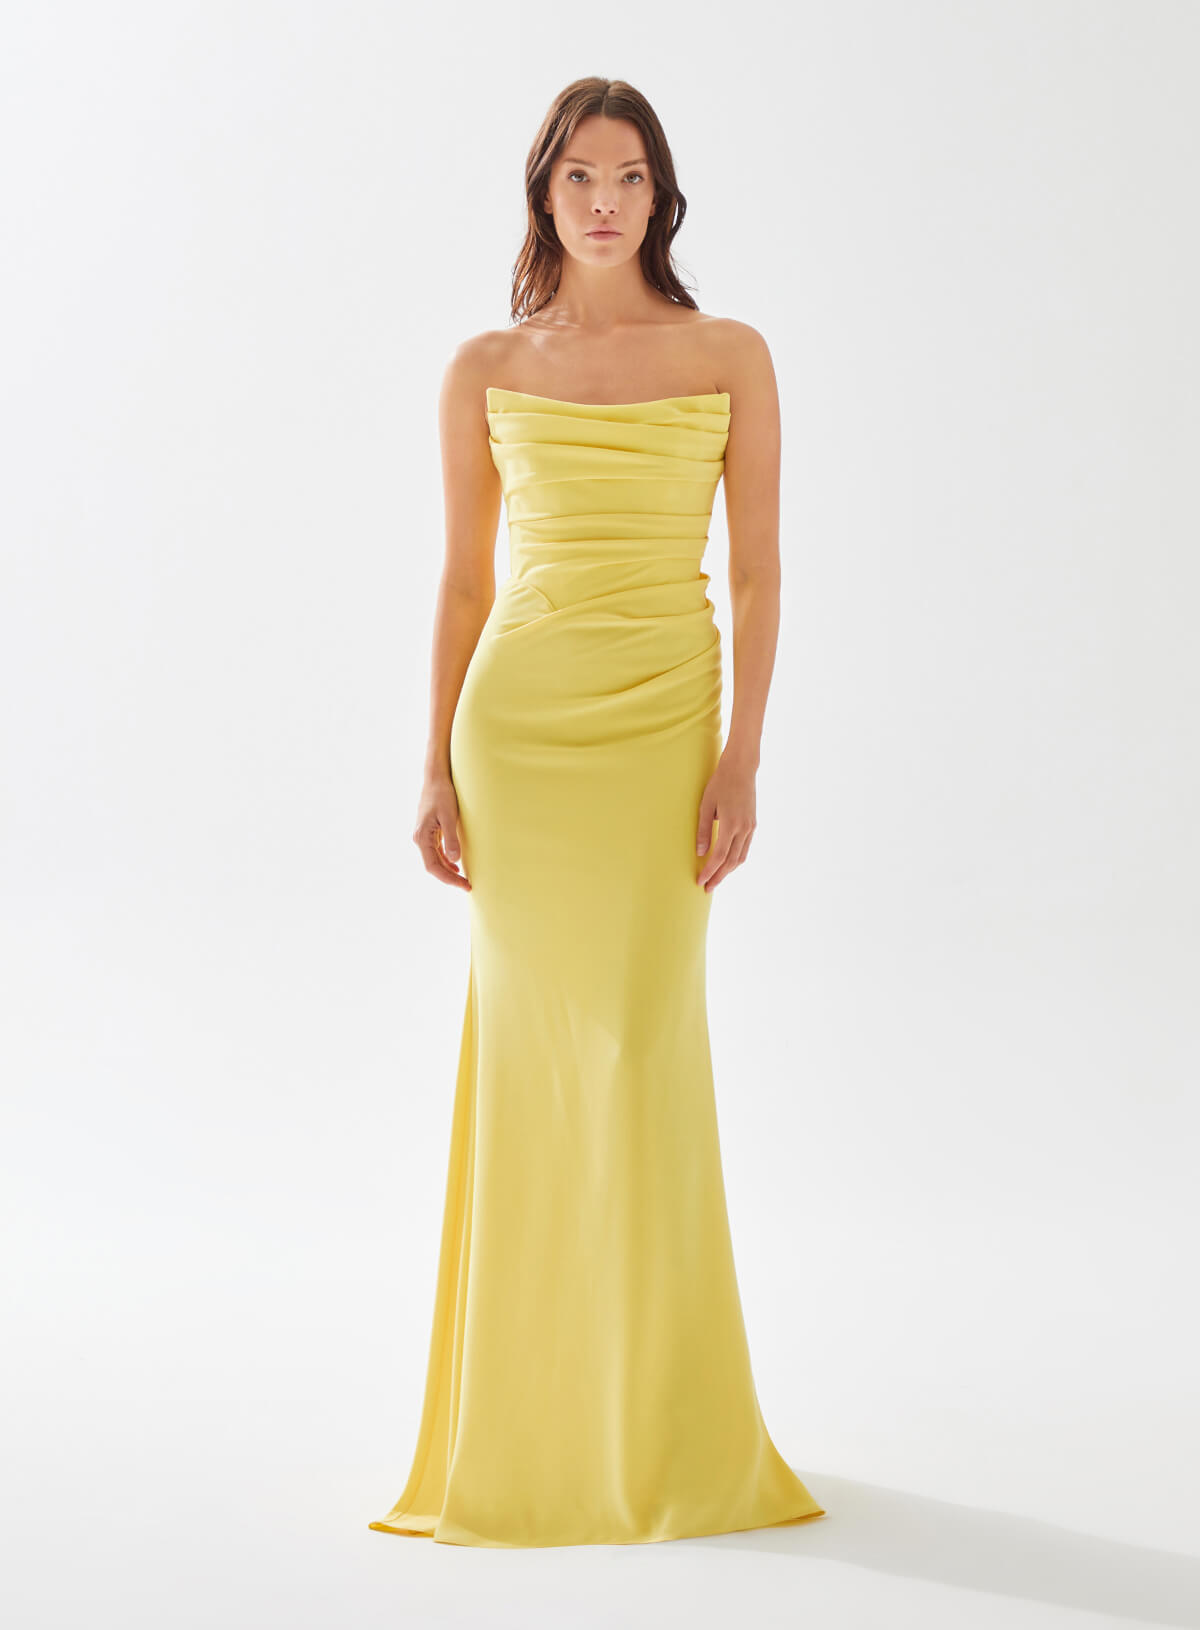 yellow strapless evening dress